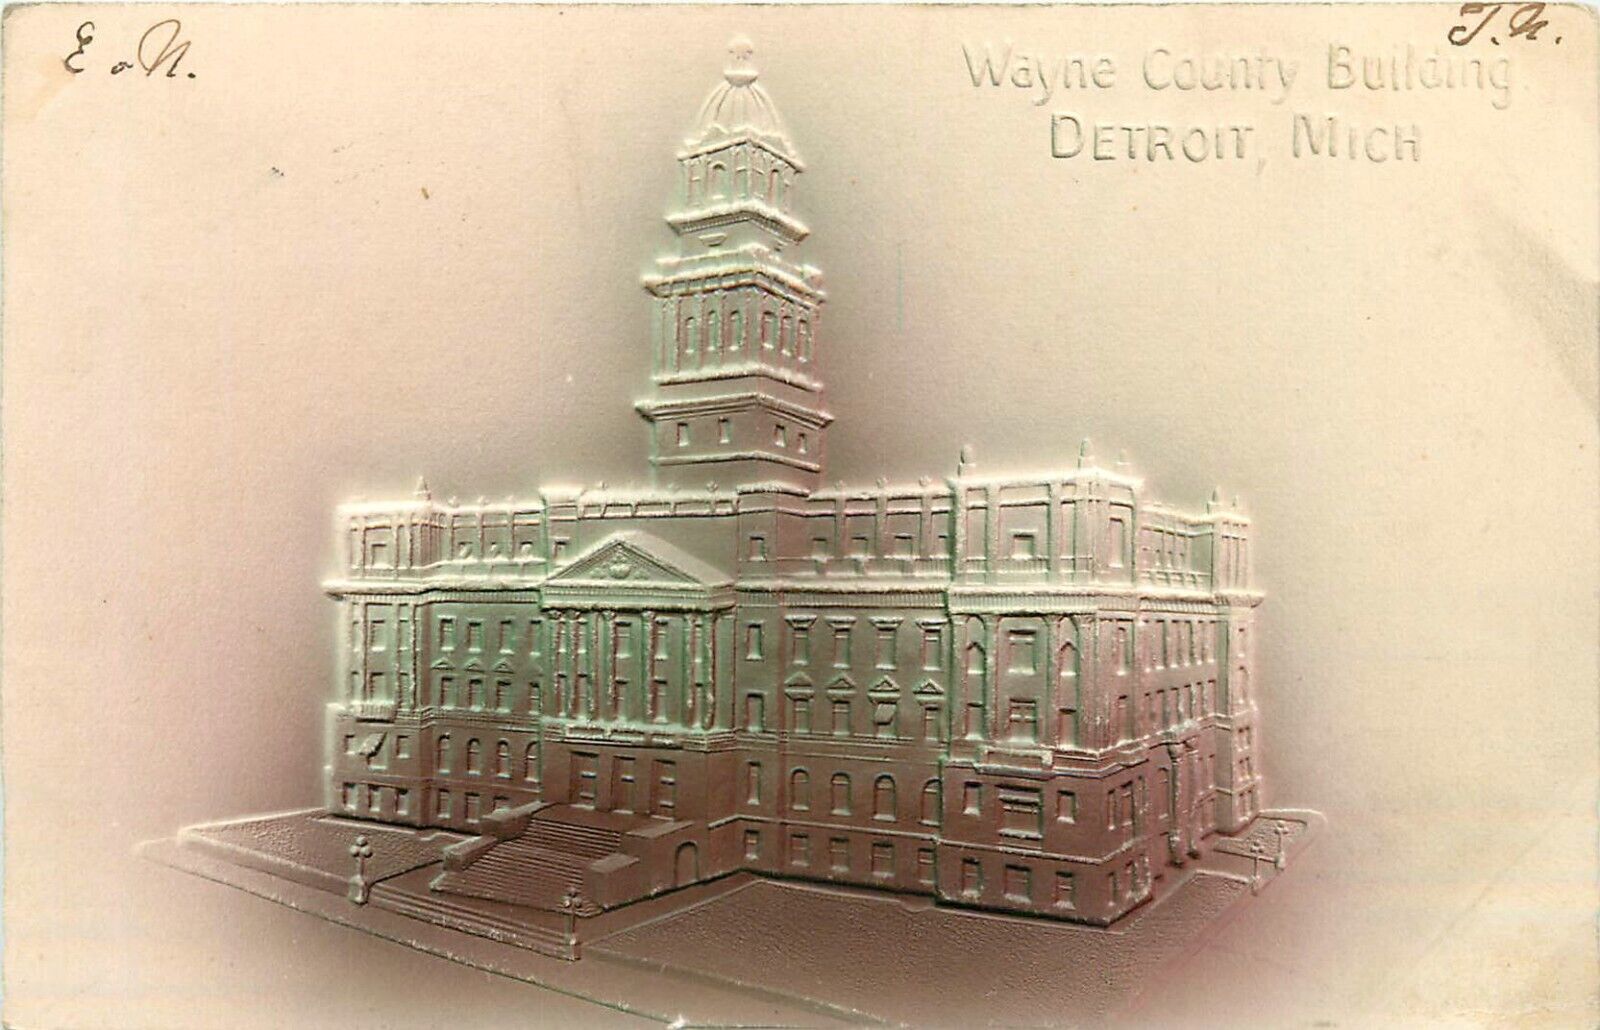 1907 Wayne County Court House, Detroit, Michigan Embossed Postcard